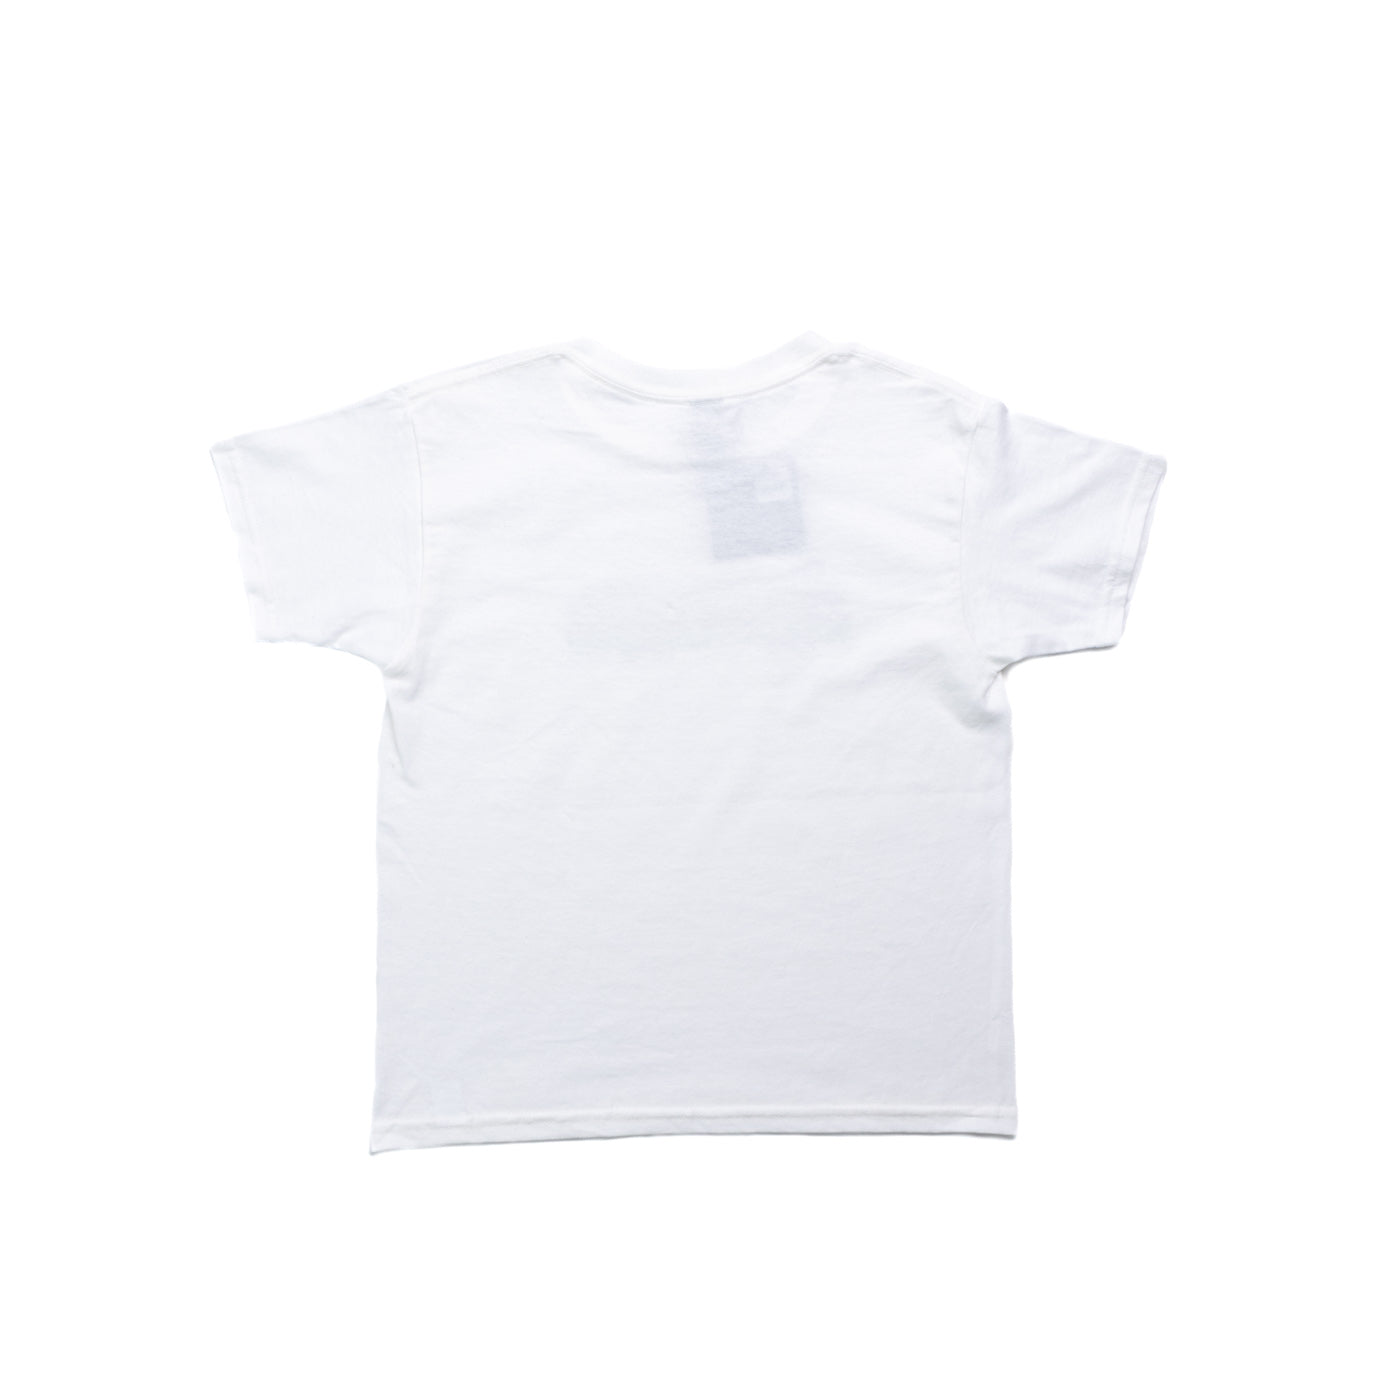 Trolley Pixel T-Shirt - Youth